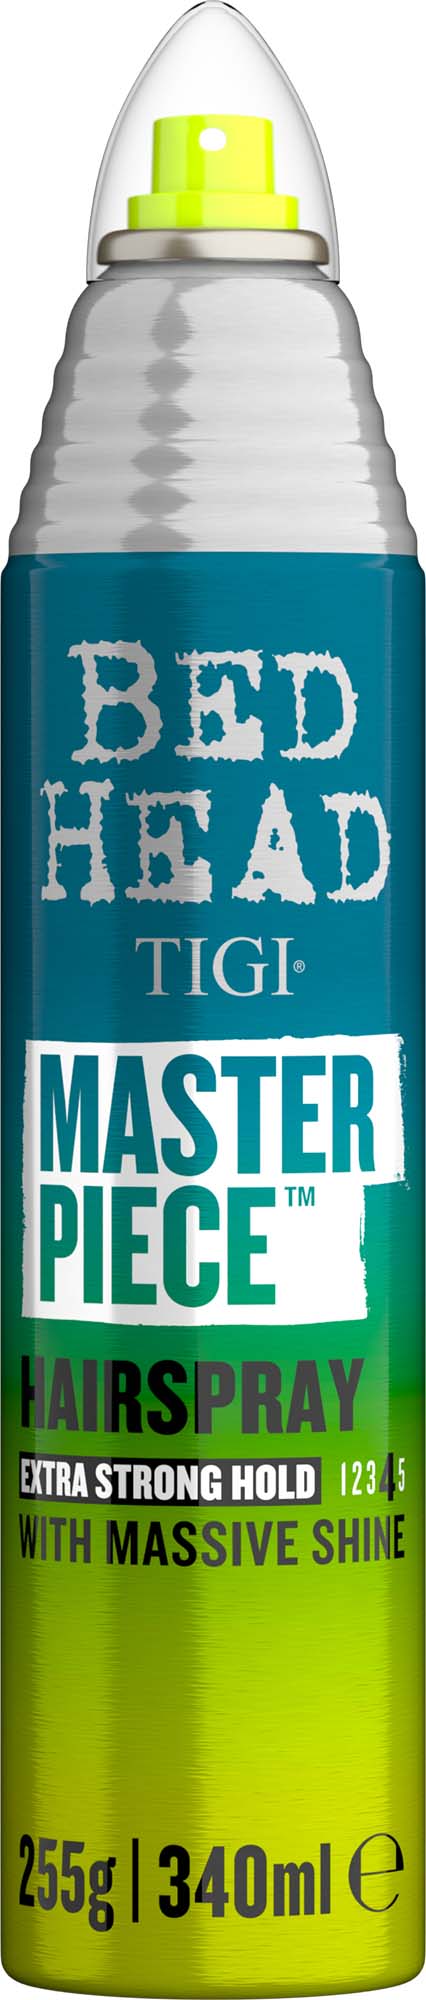 Tigi Head Masterpiece Hairspray 340 ml | lyko.com